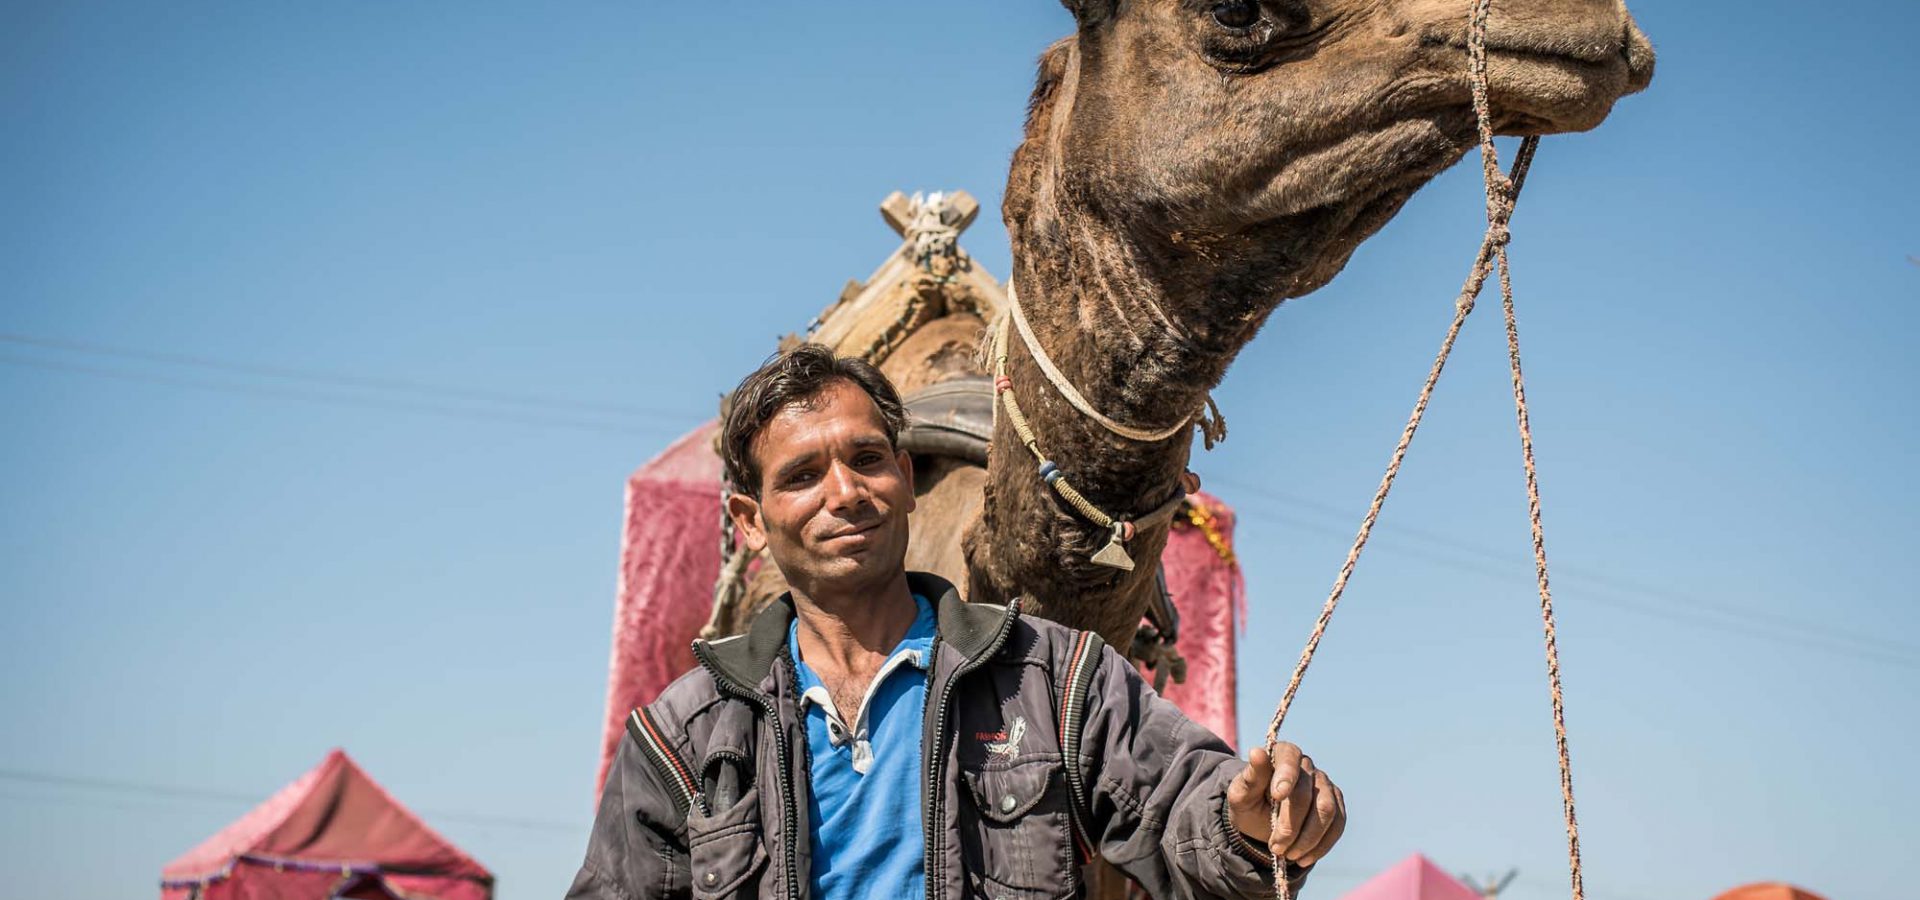 Man standing next to camel